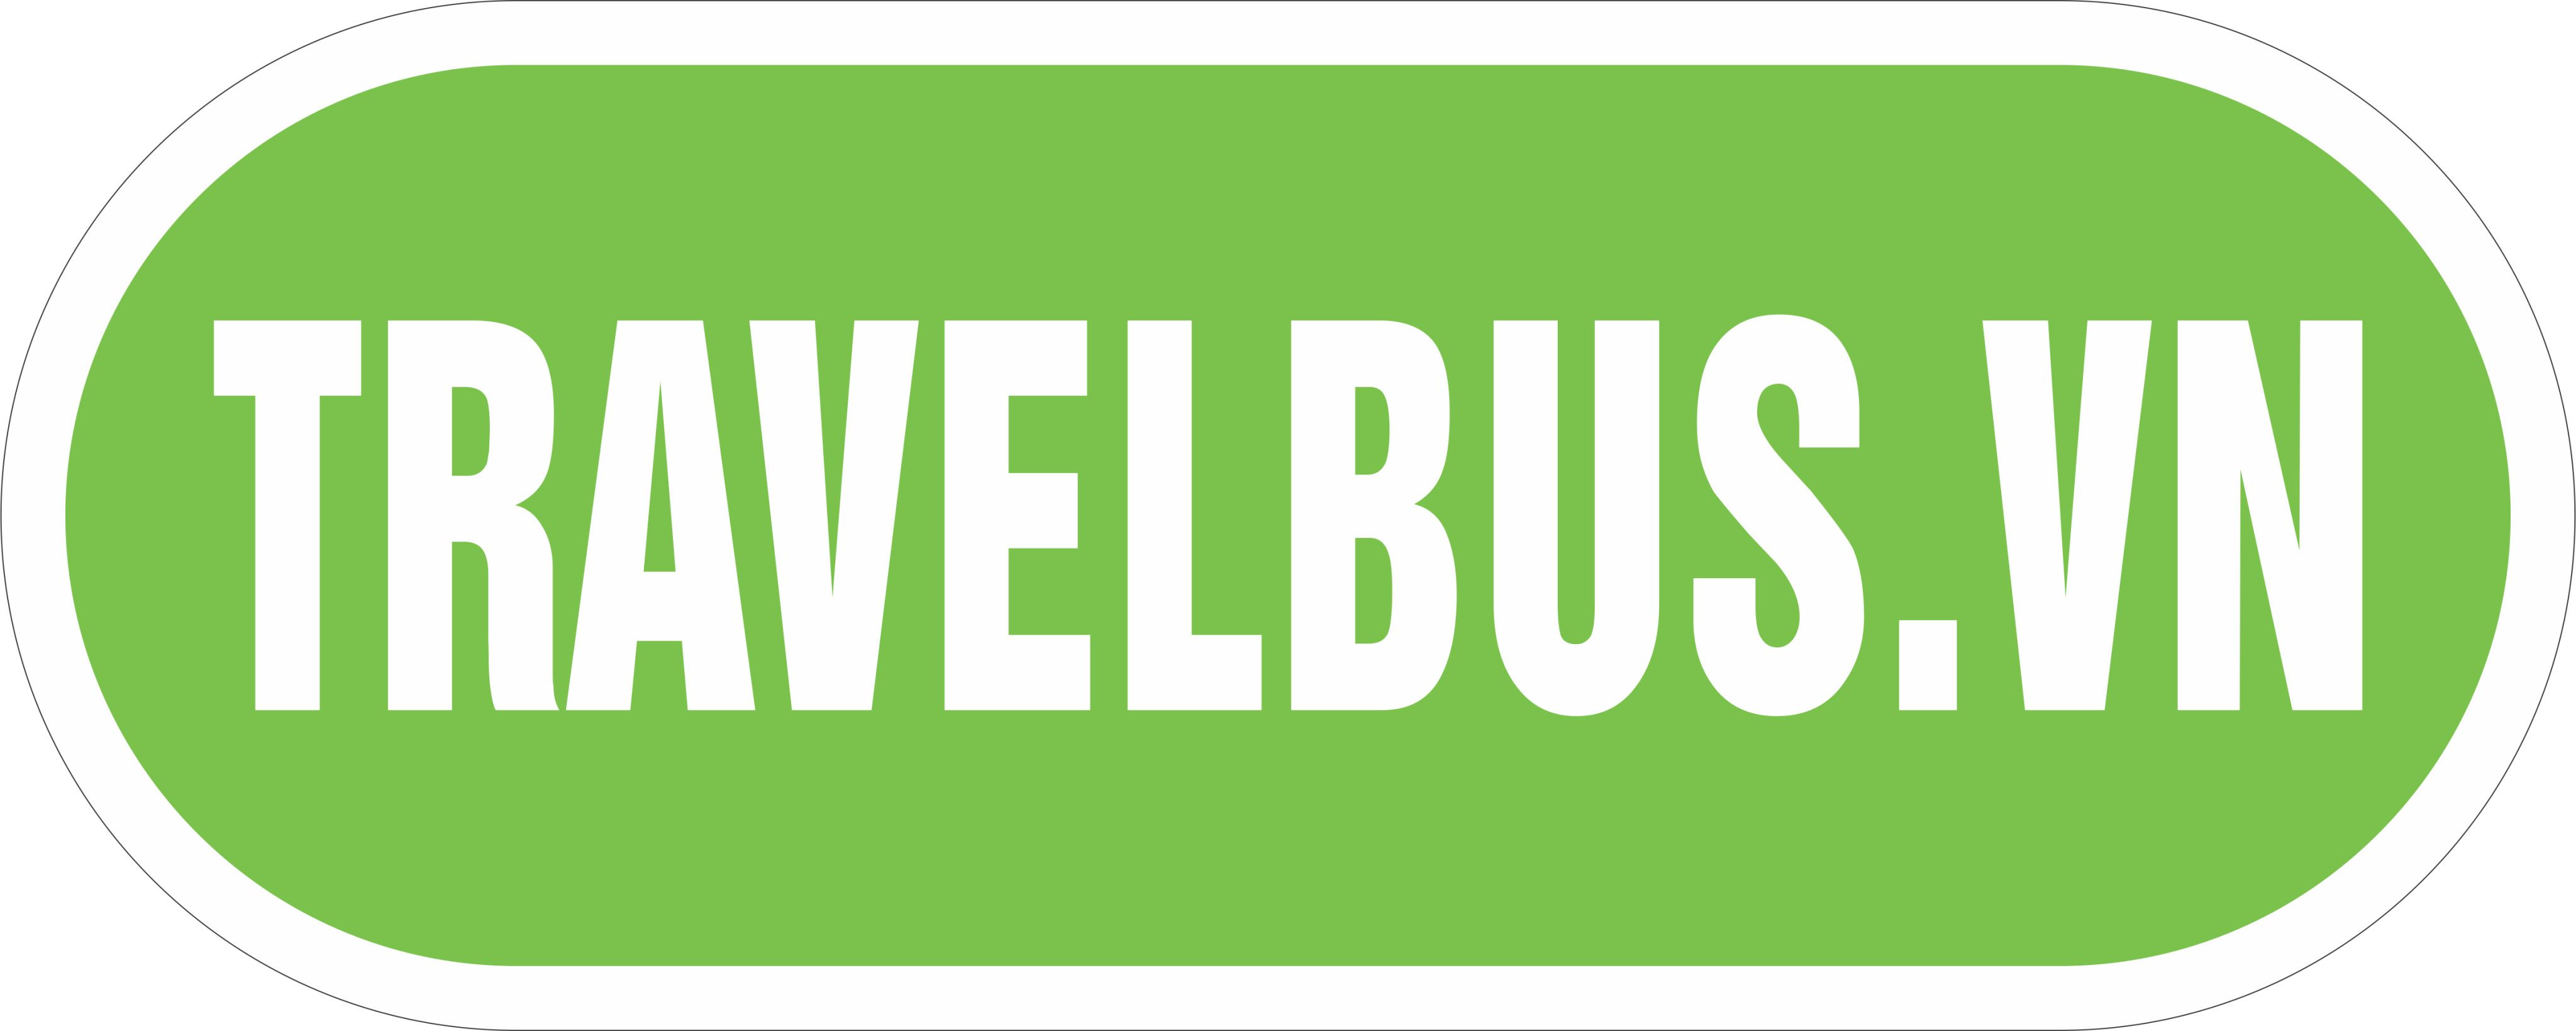 Dong Hanh Travel Bus logo